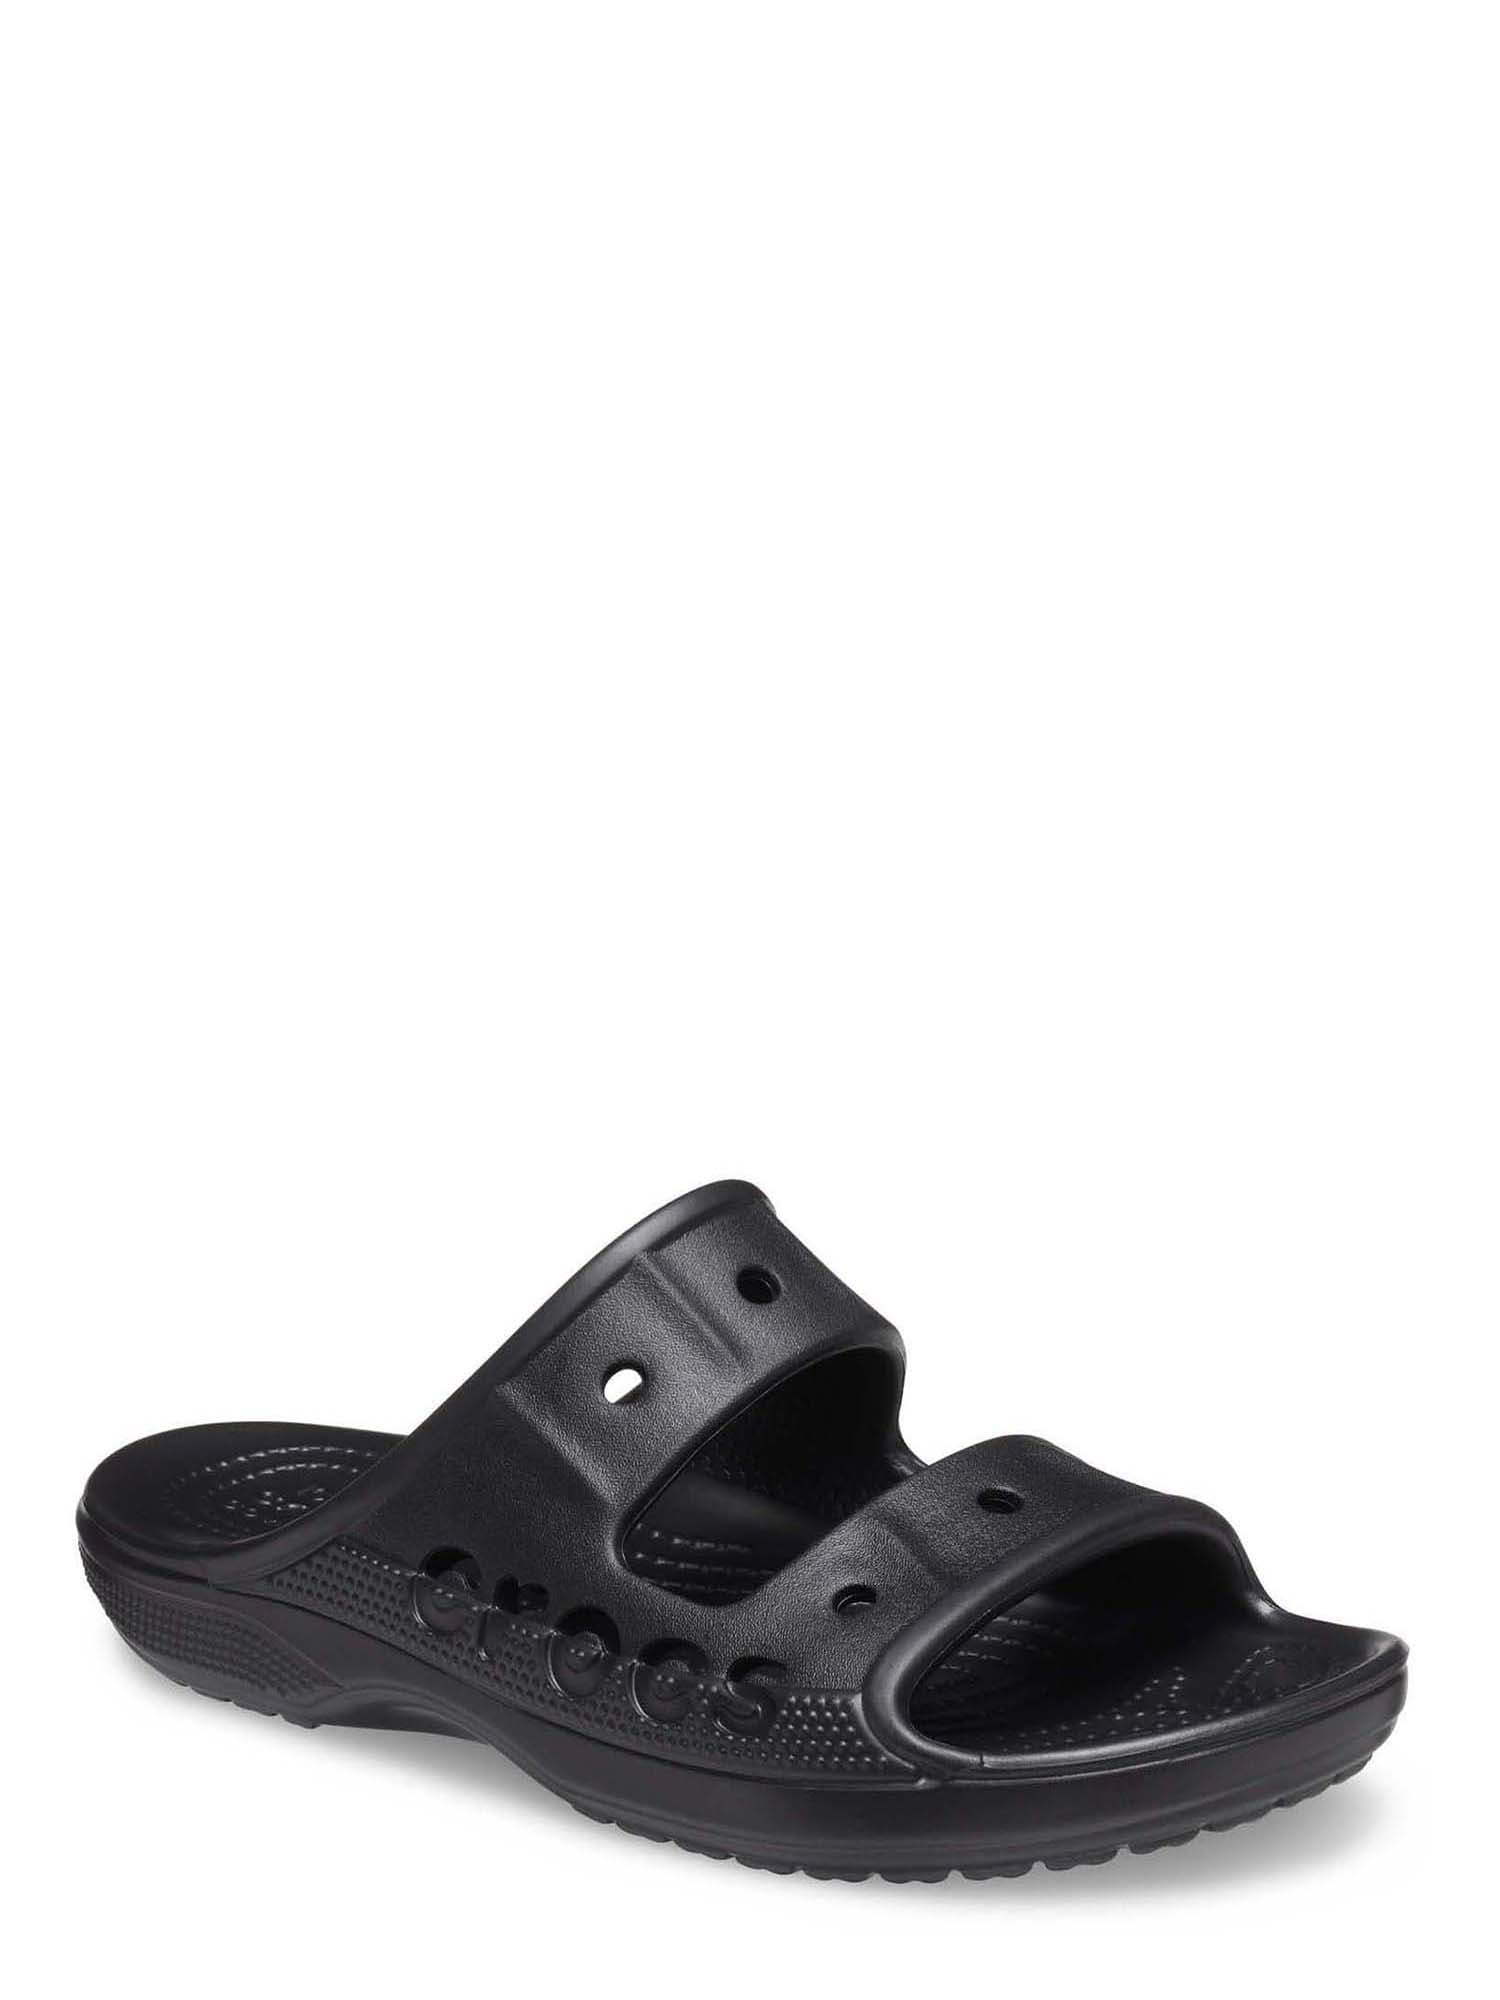 Crocs Unisex Baya Slide Sandals - Walmart.com